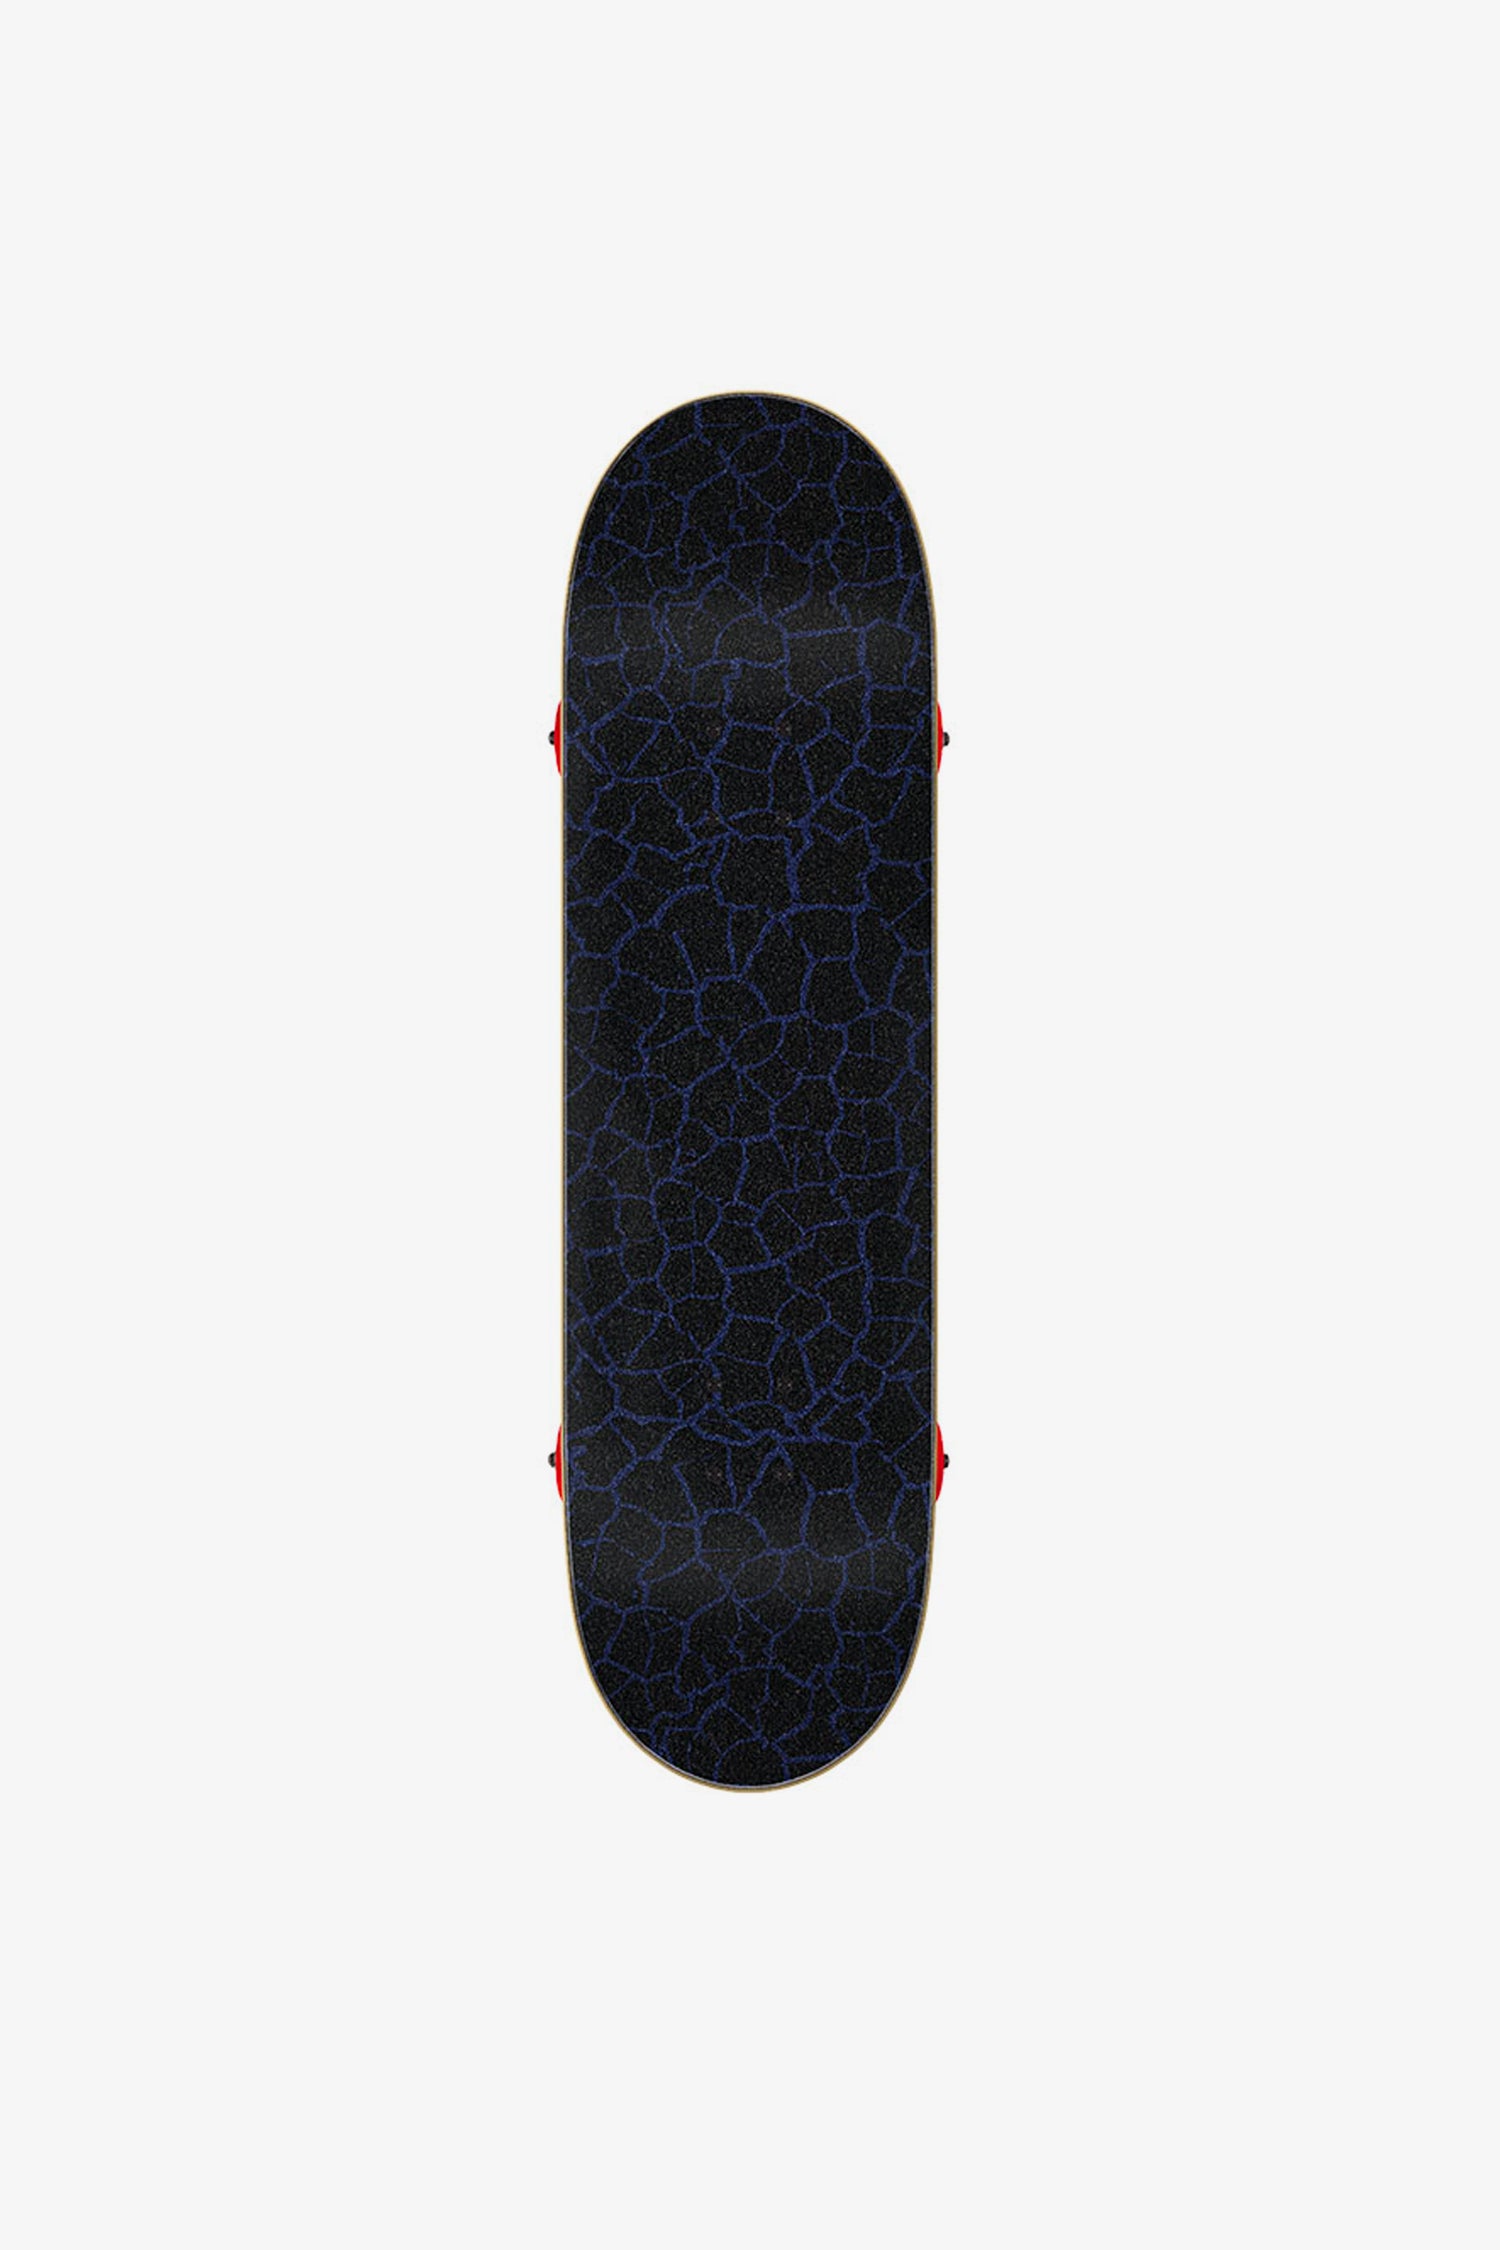 Selectshop FRAME - SANTA CRUZ Flame Dot Micro Skate Complete Skateboards Dubai